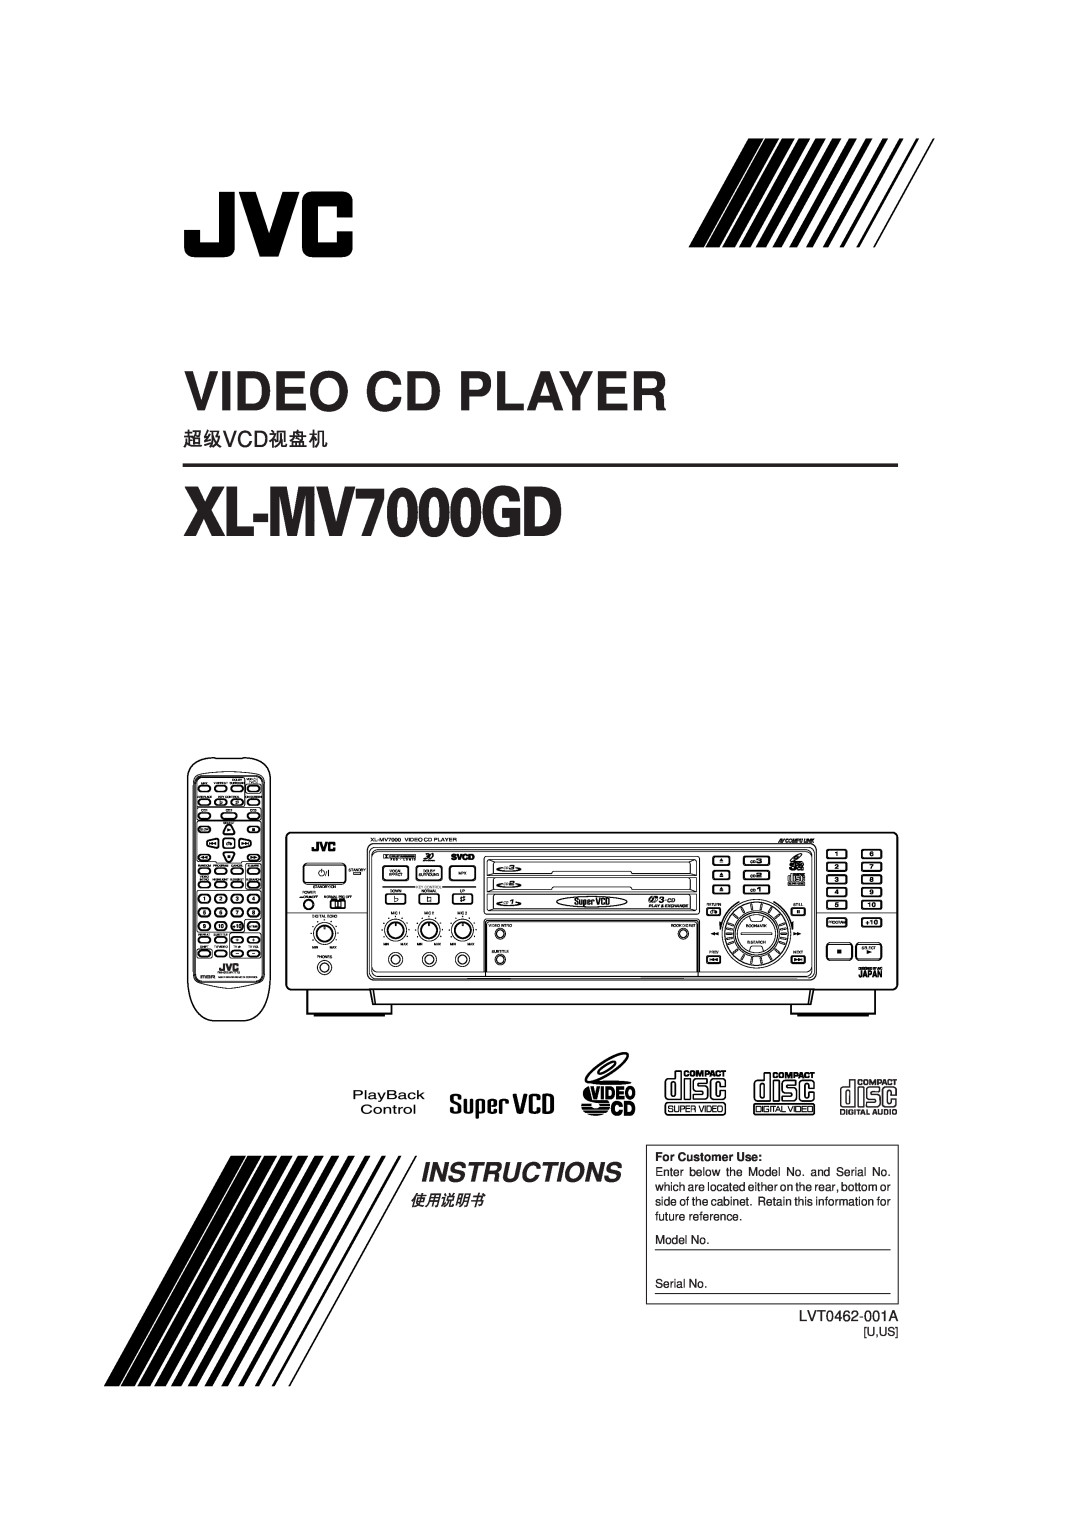 JVC XL-MV7000GD manual LVT0462-001A, Video Cd Player, Instructions 